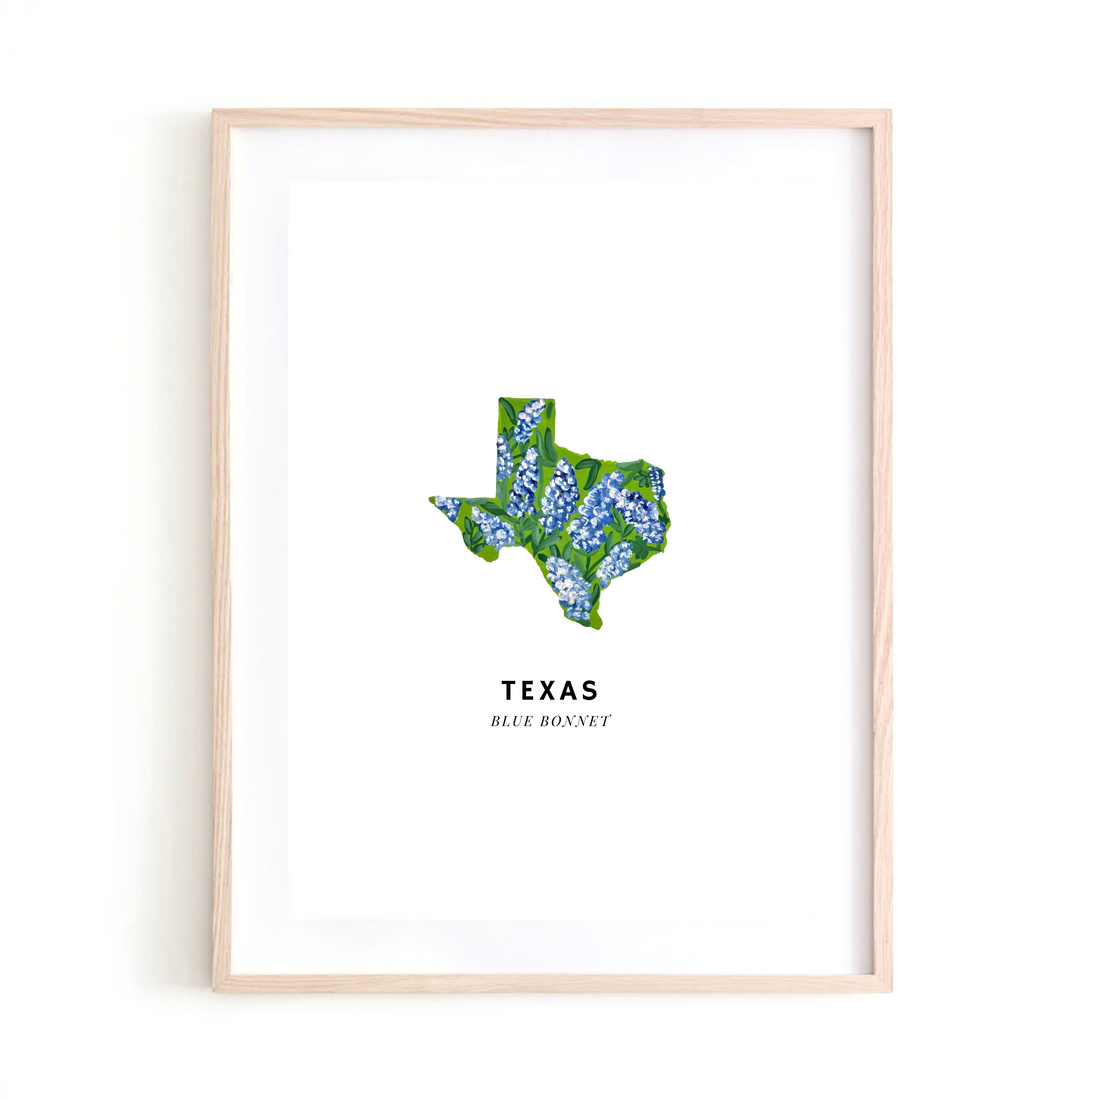 Texas State Flower art print